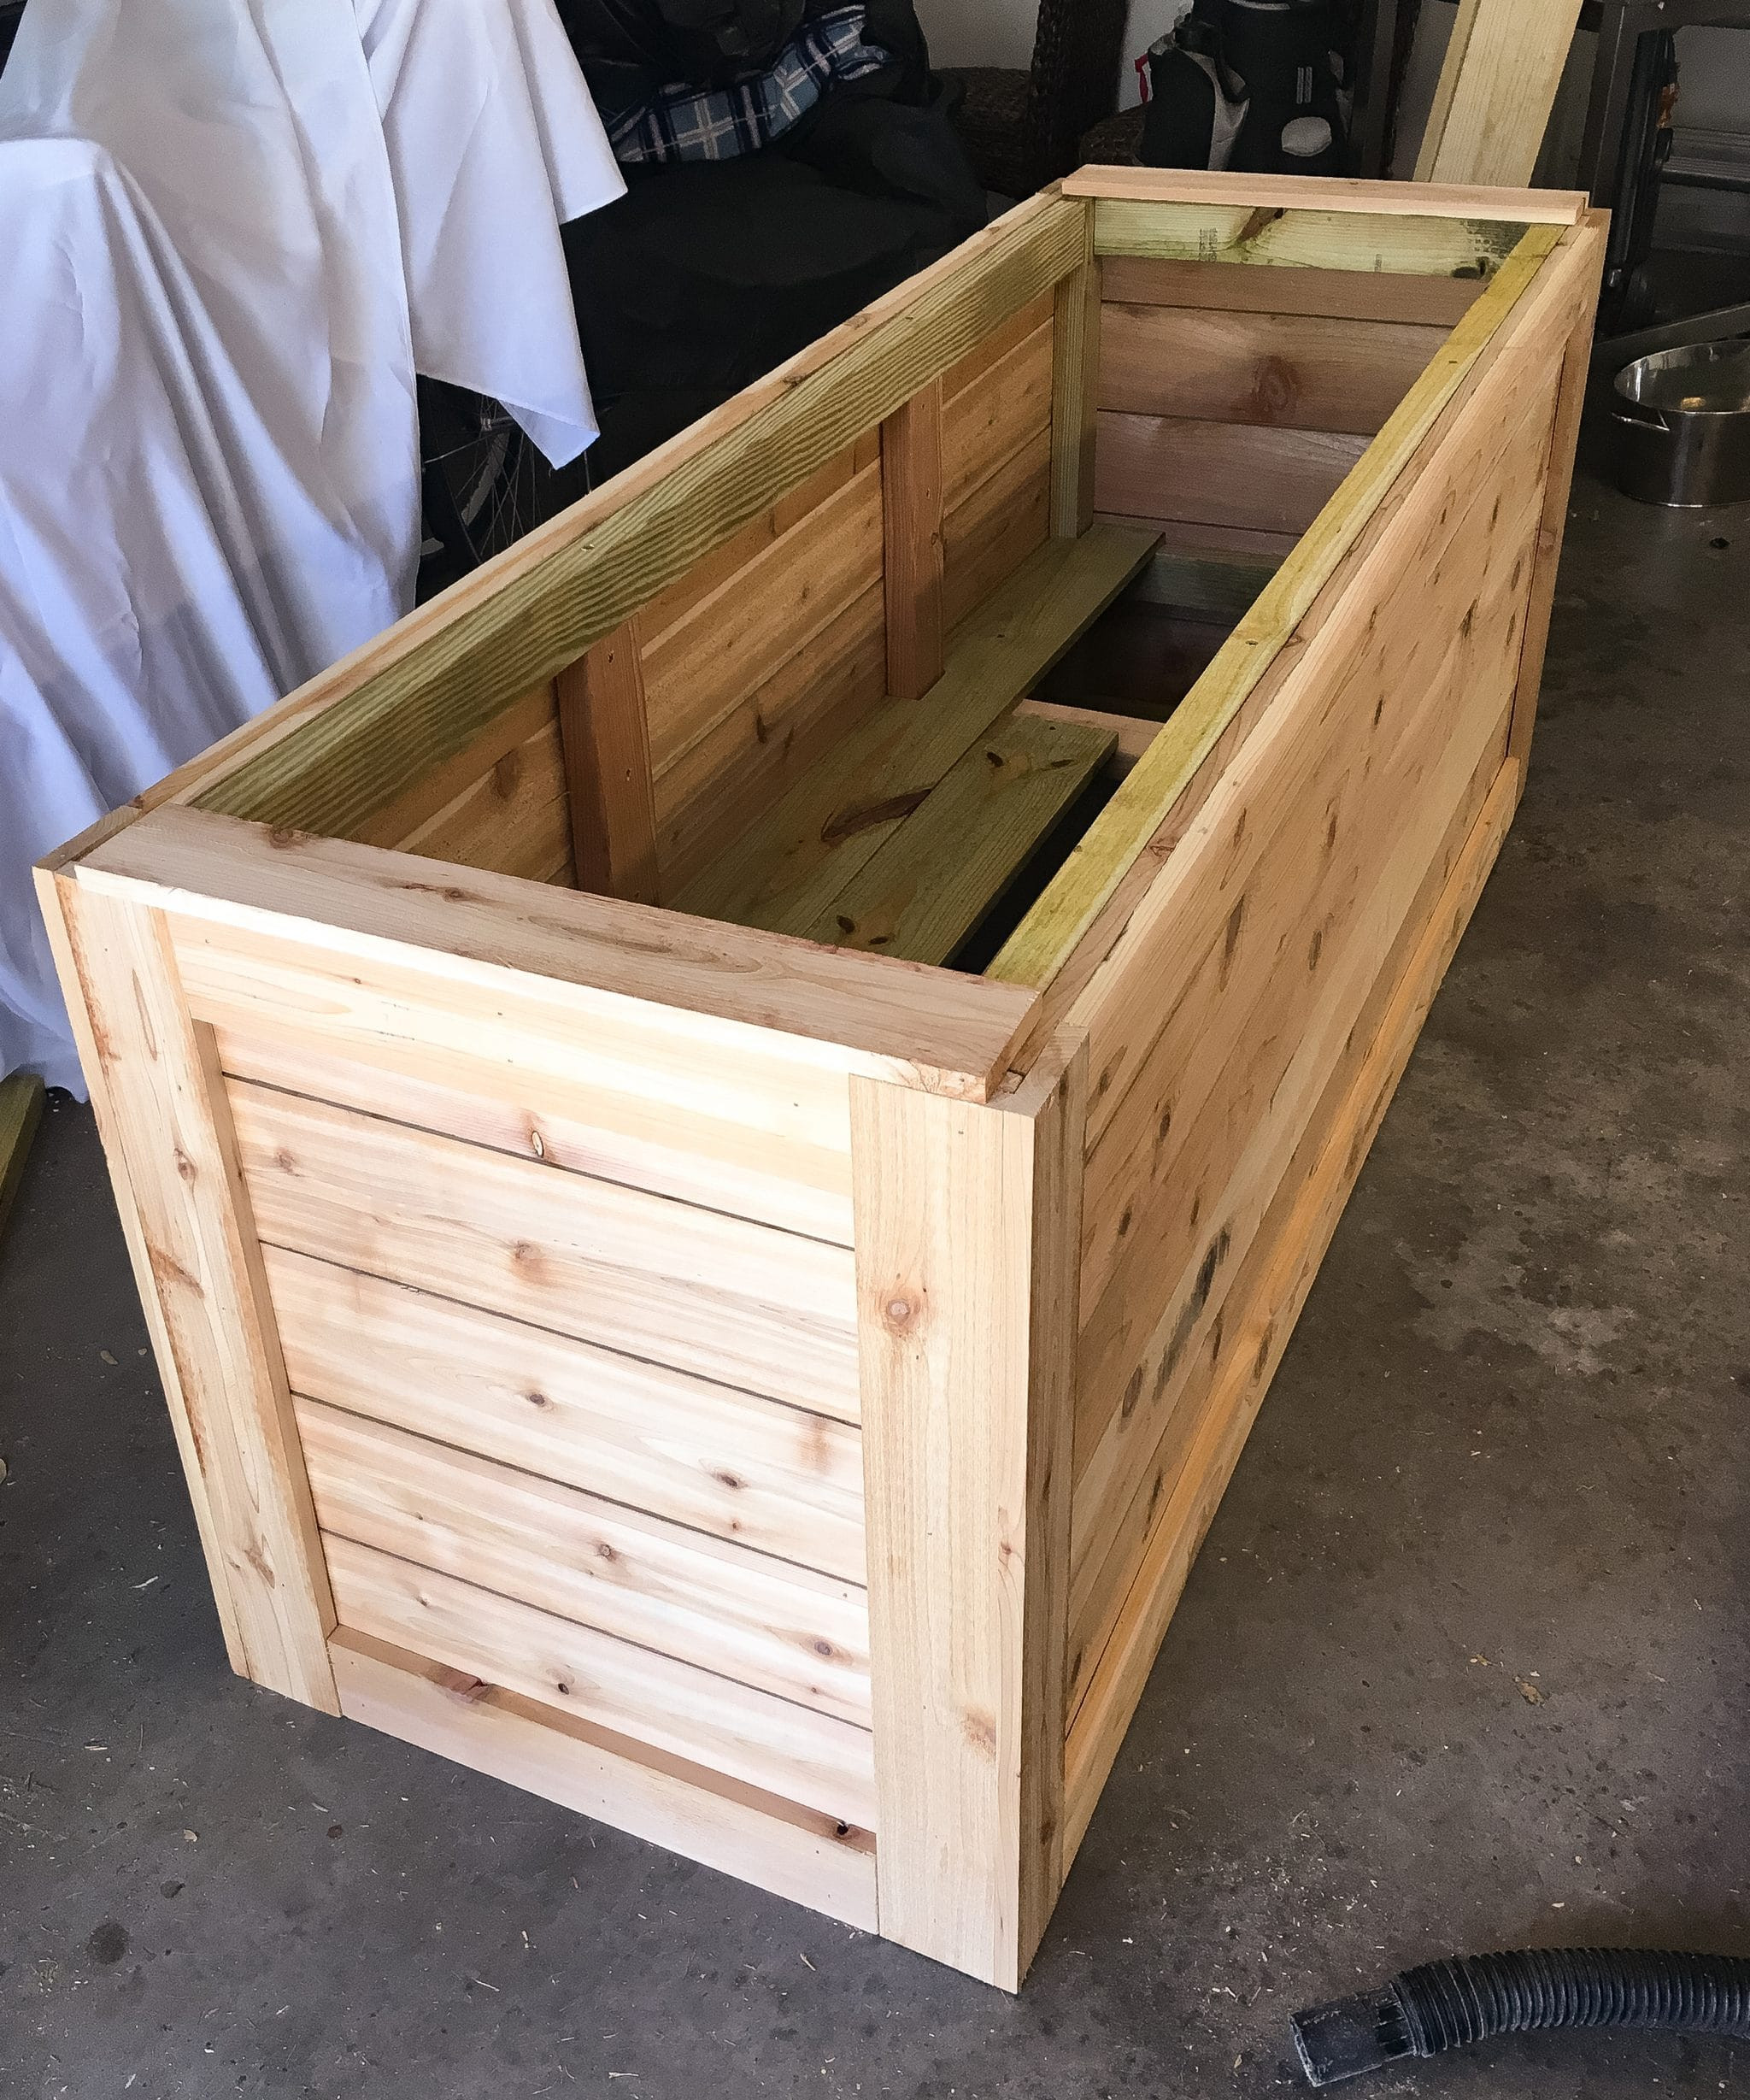 Best ideas about DIY Wooden Box
. Save or Pin BACKYARD DIY SERIES PART IIII Cedar Wood Planter Box Now.